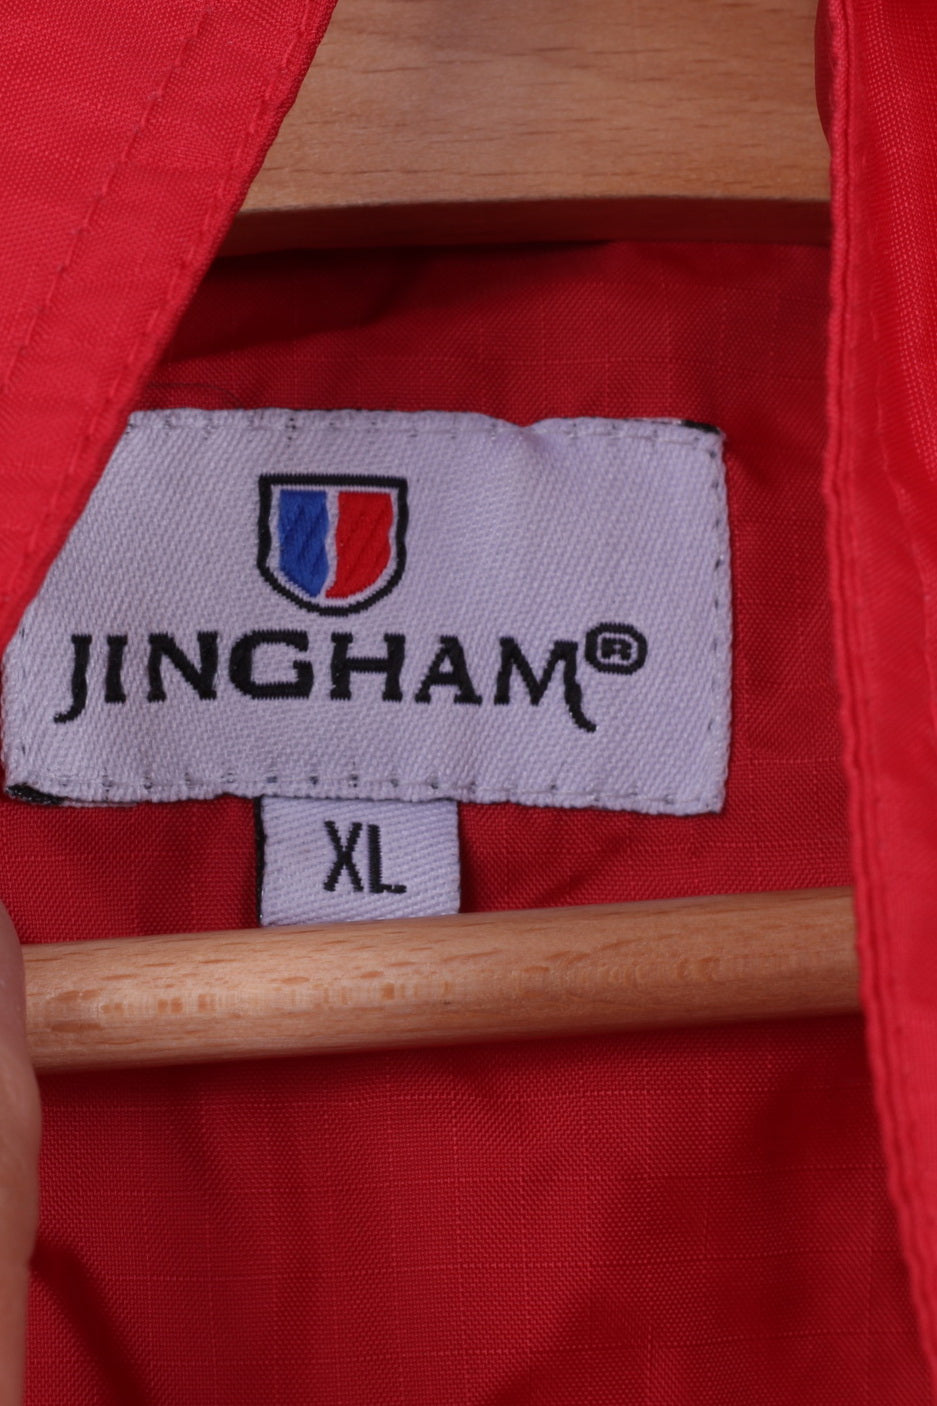 Jingham Kommunal Mens XL Jacket Full Zipper Red Nylon Waterproof